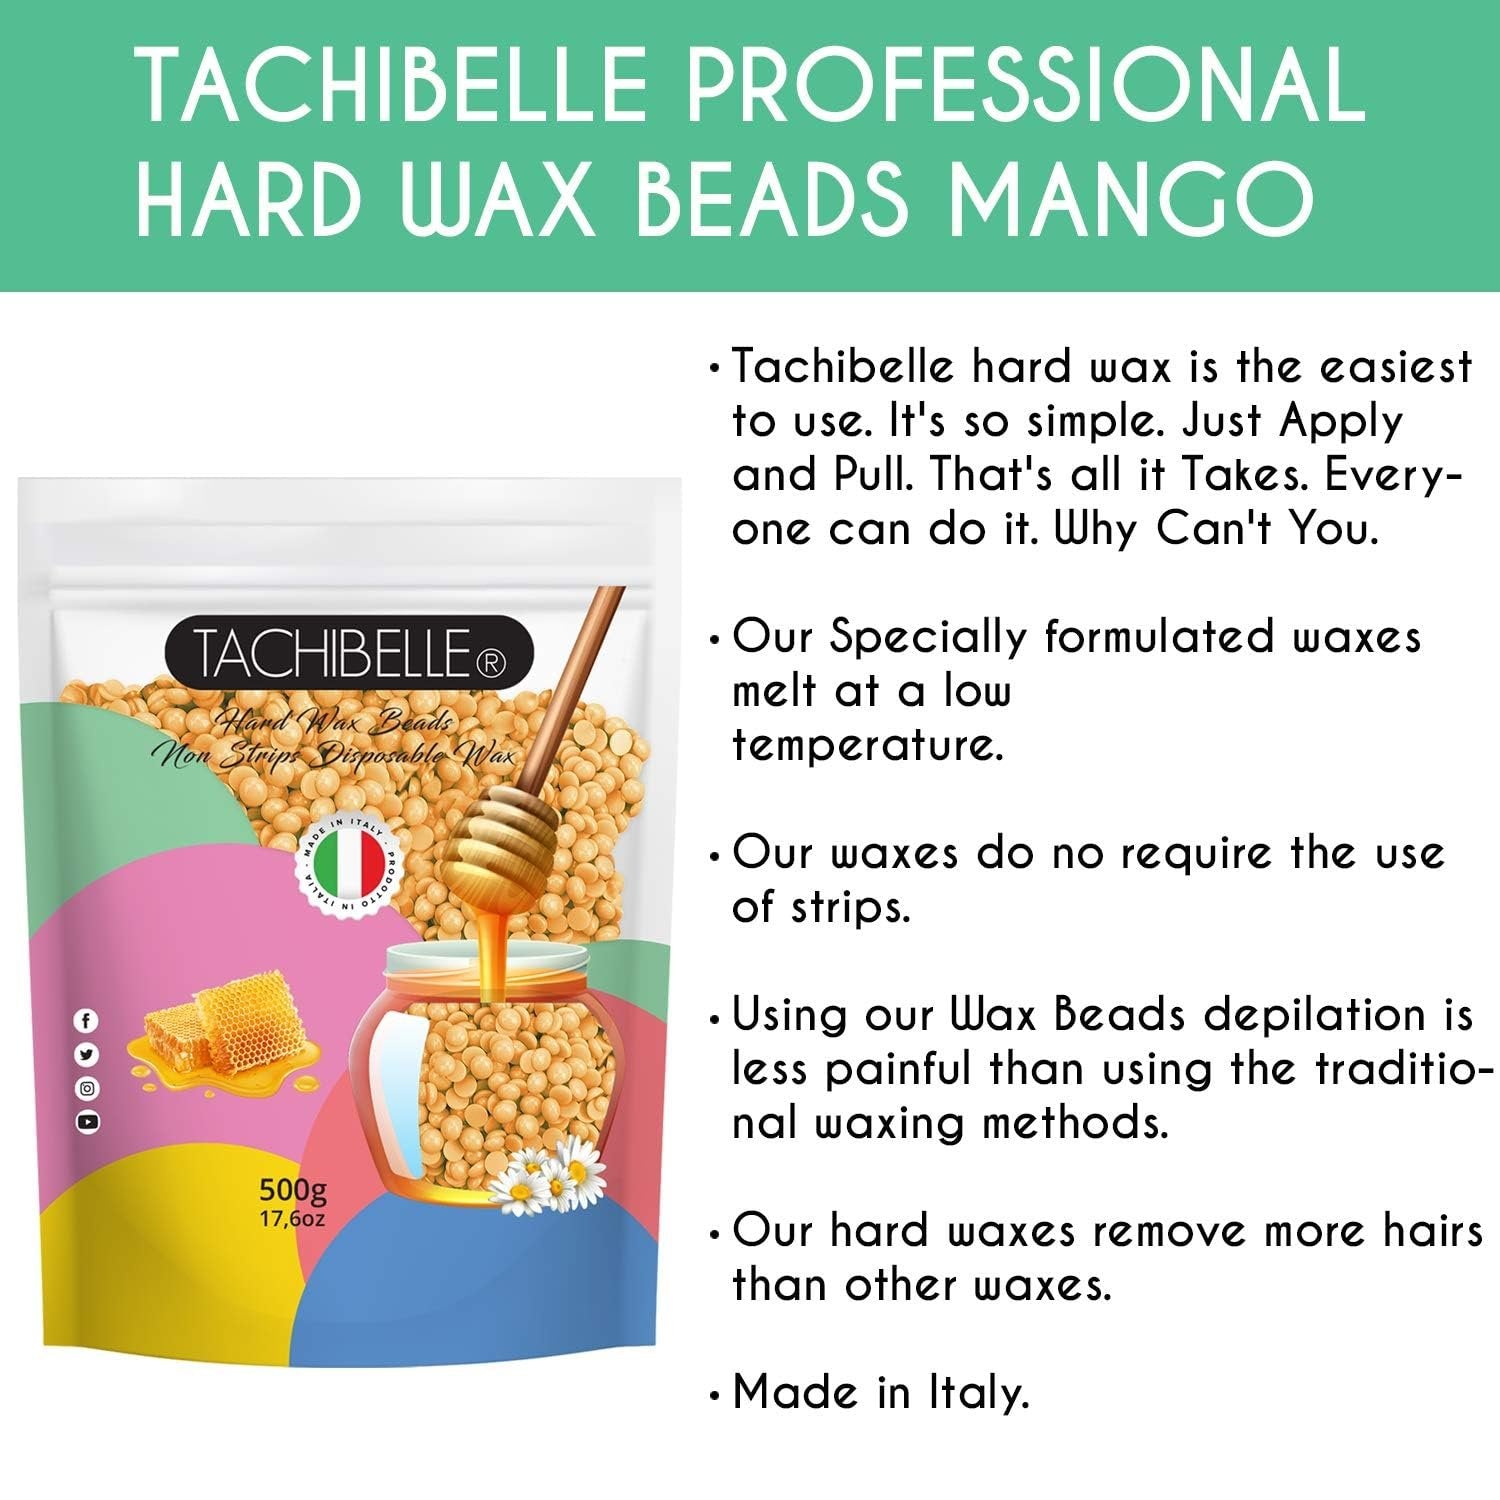 Easy to Use Hard Wax Beans, Hair Removal Full Body Brazilian Bikini Beads Waxing for Sensitive Skin Face Bikini Legs Eyebrow 500g/1.1 lb Made In Italy 2 Count